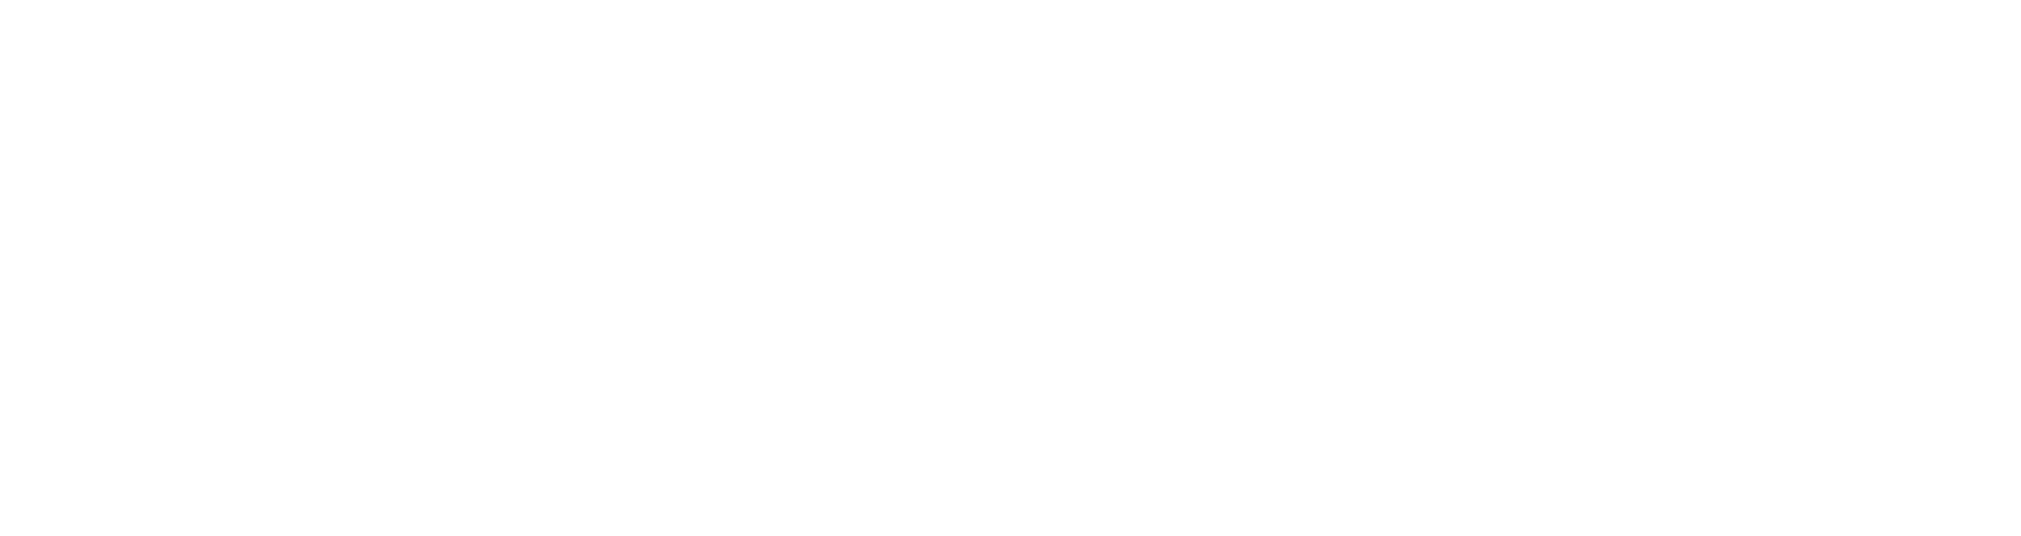 Youfibre Logo